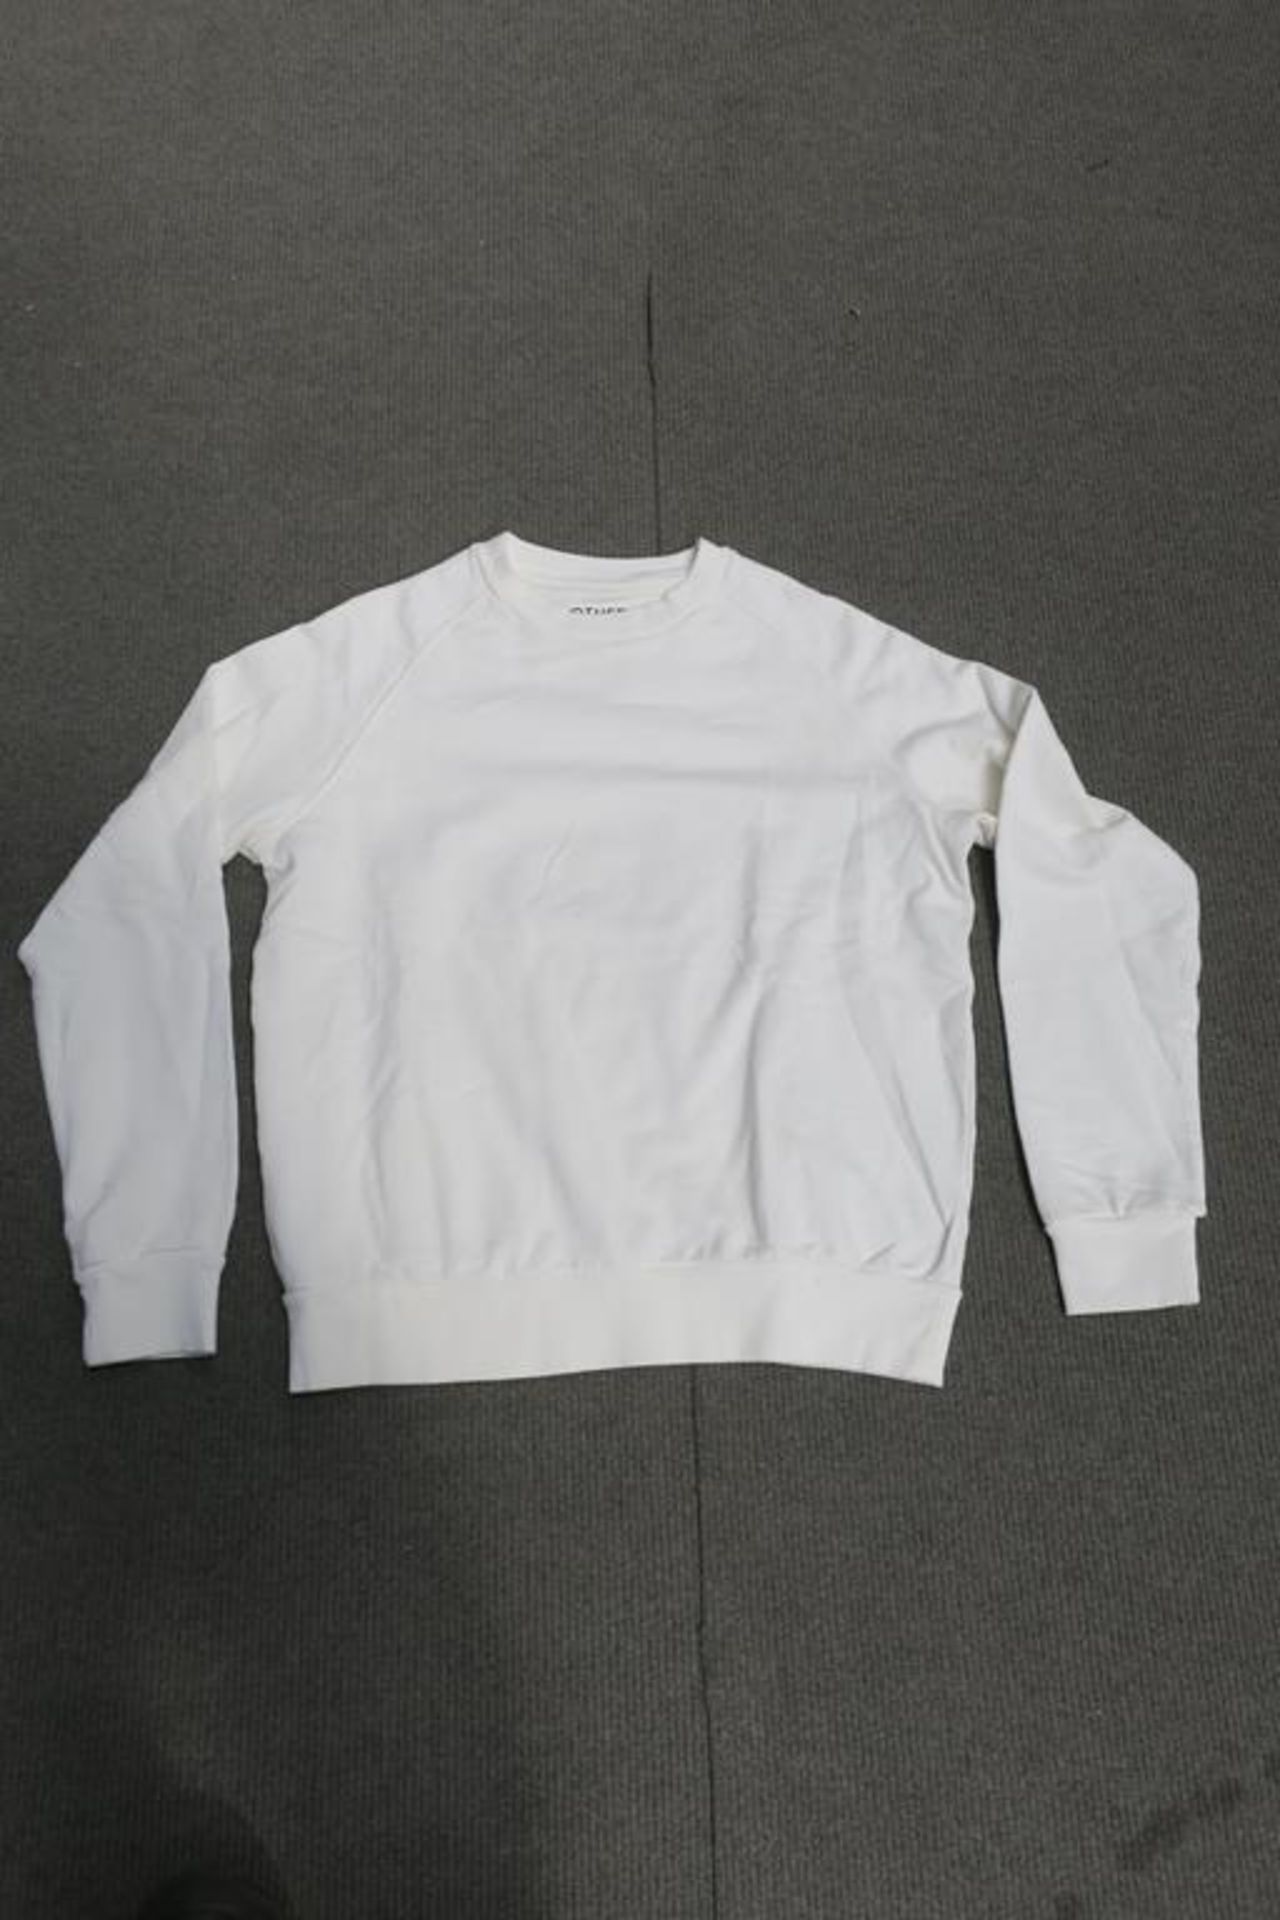 9 Other Ragian Sweatshirts Long Sleeved, Colour Ecru, 1 x XLarge, 1 x Large, 4 x Medium, 3 x Small